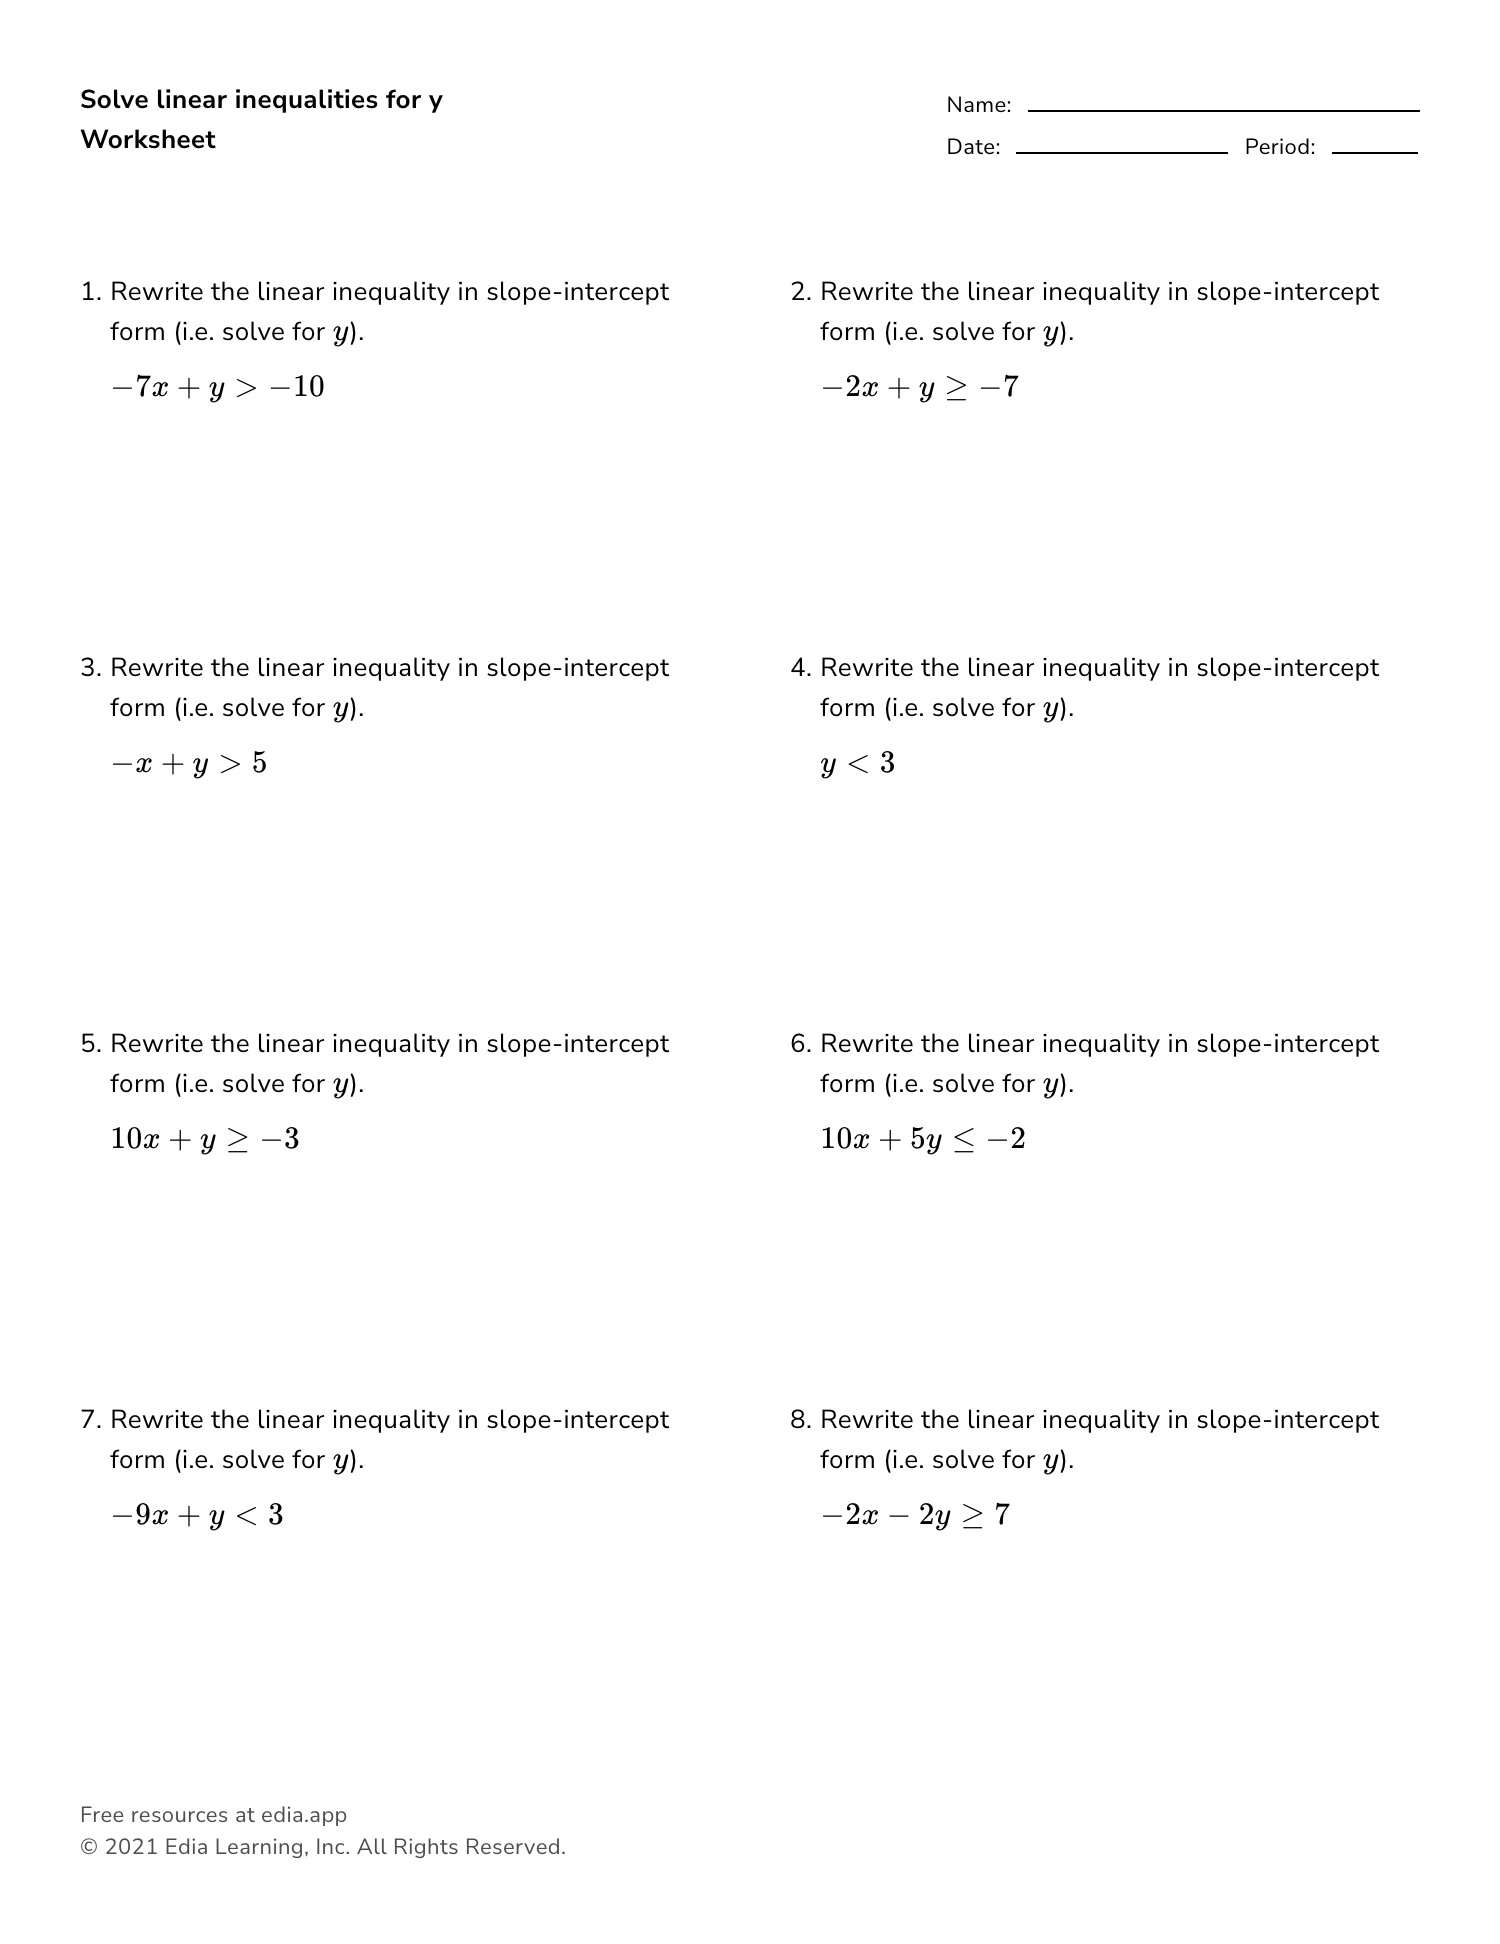 Solve Linear Inequalities For Y - Worksheet Inside Solving Linear Inequalities Worksheet